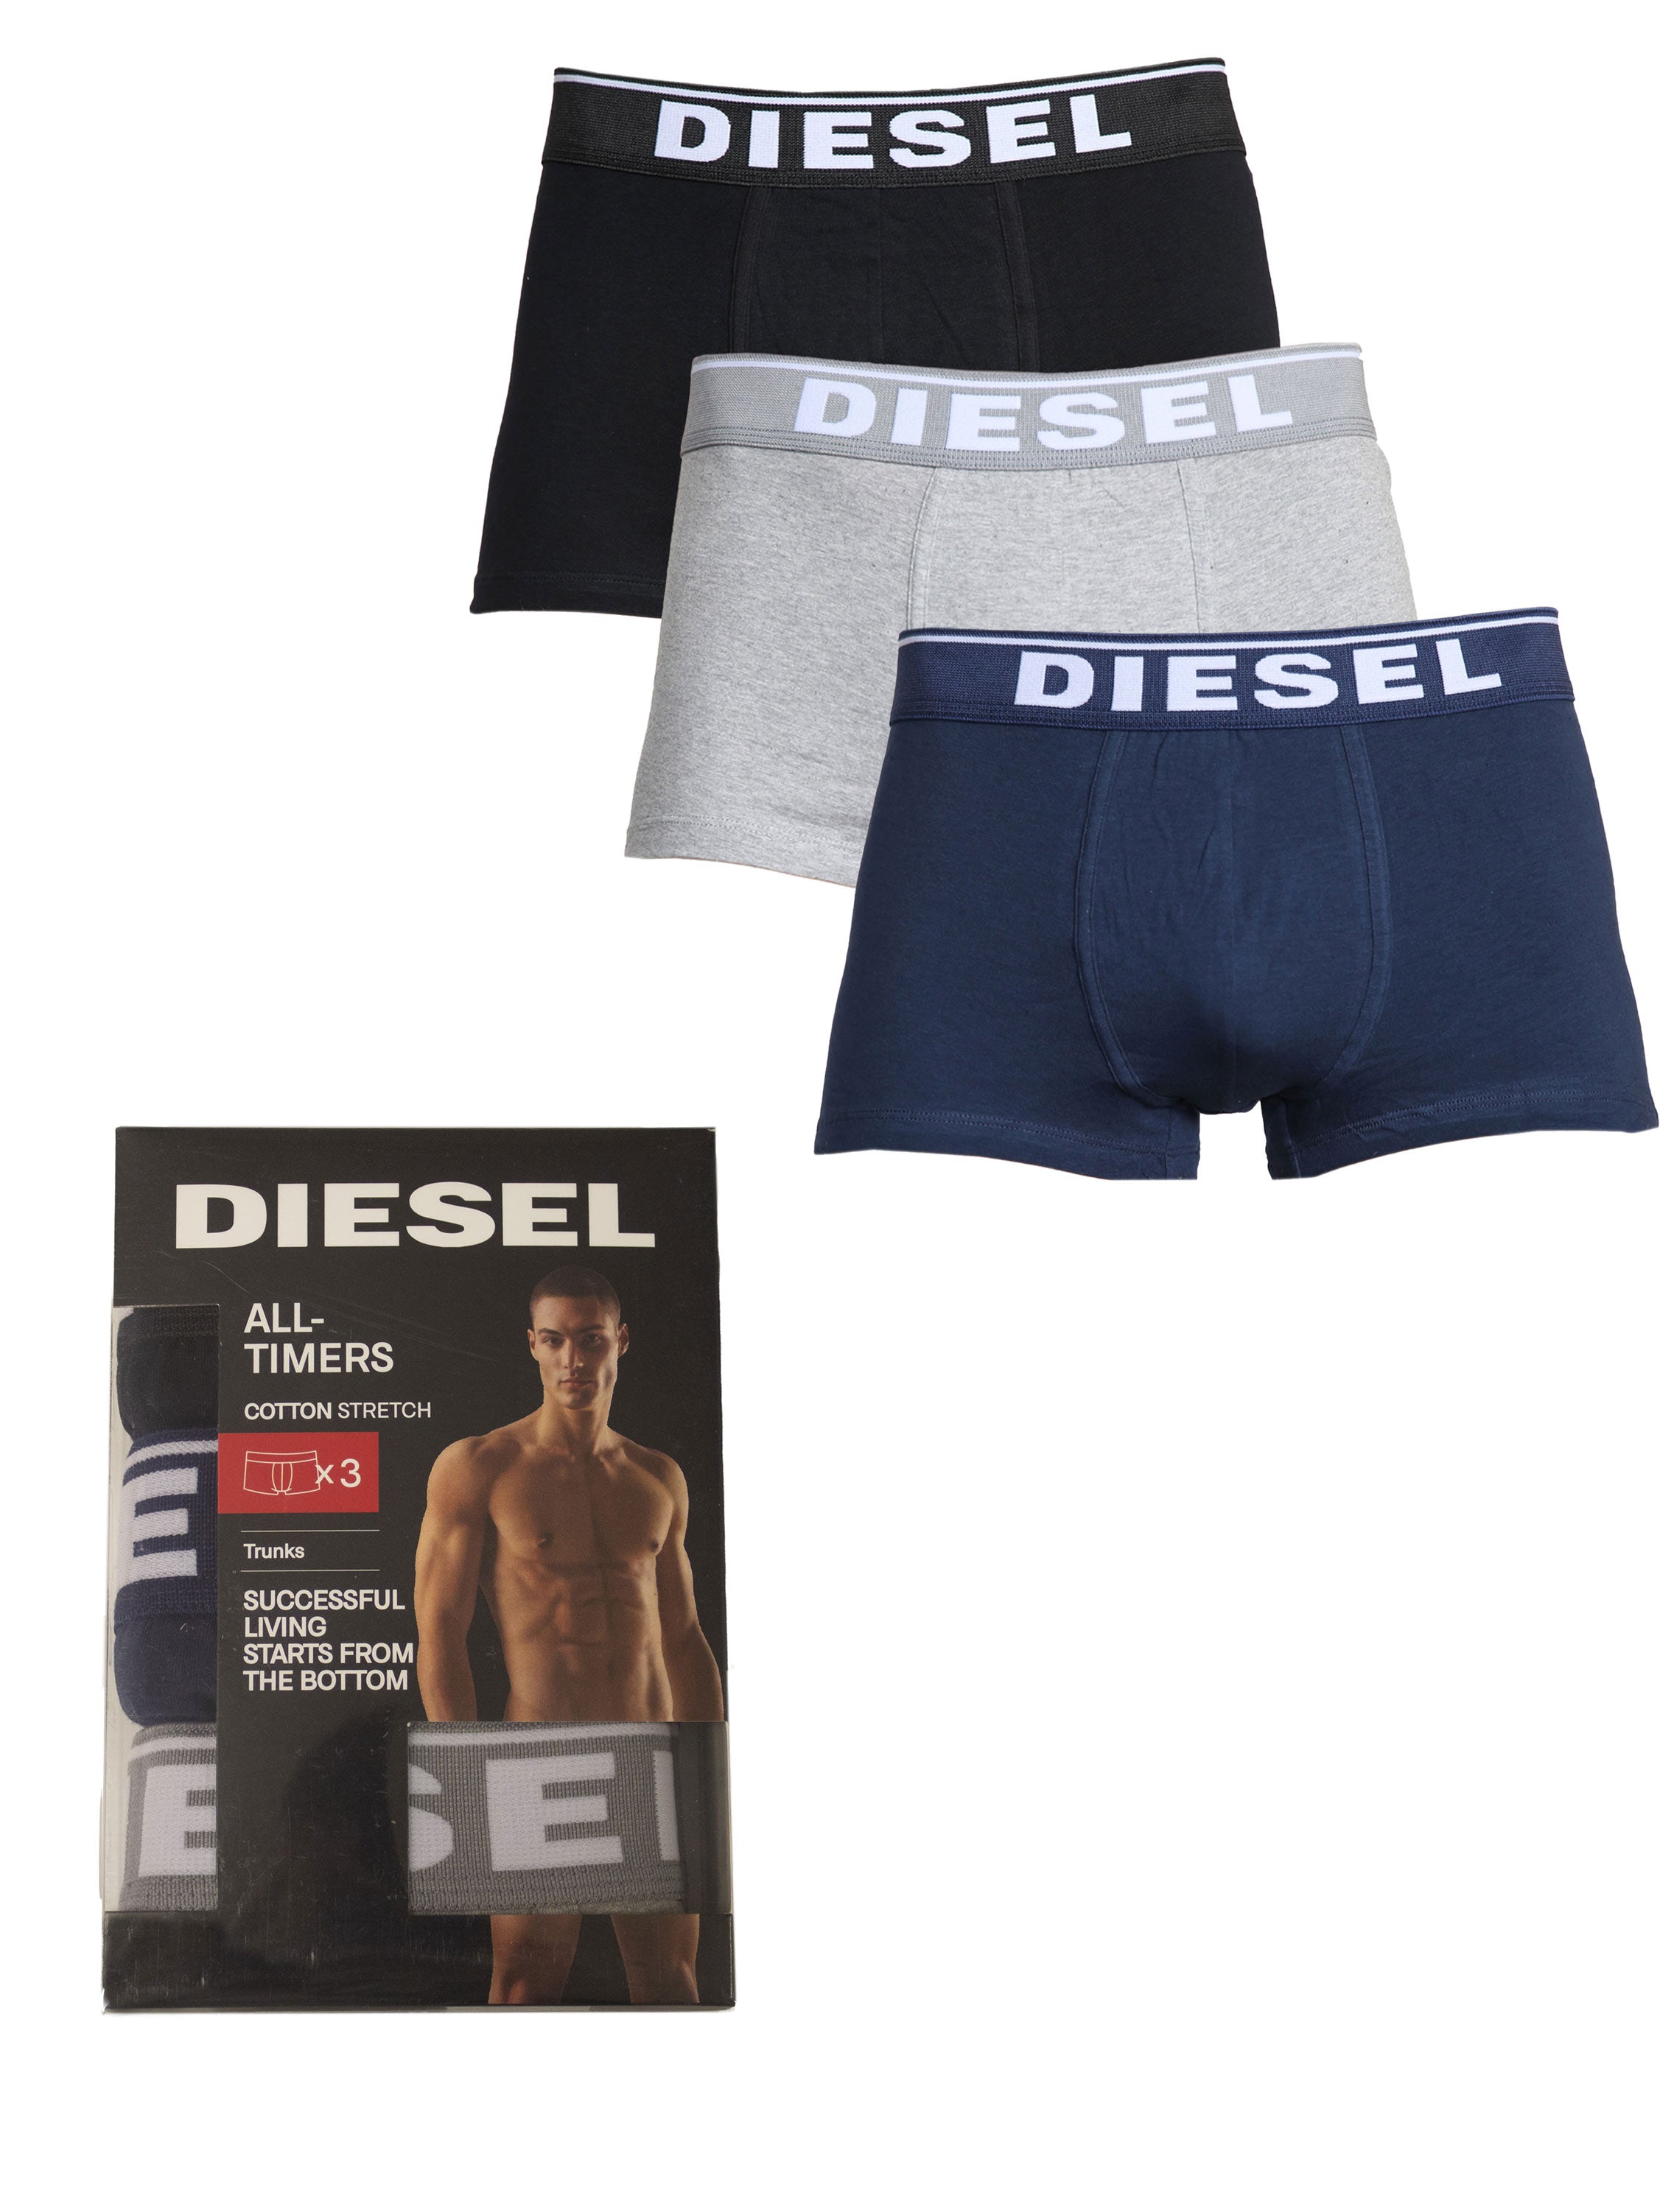 Diesel | Mens All-Timers Boxers (3 Pack)